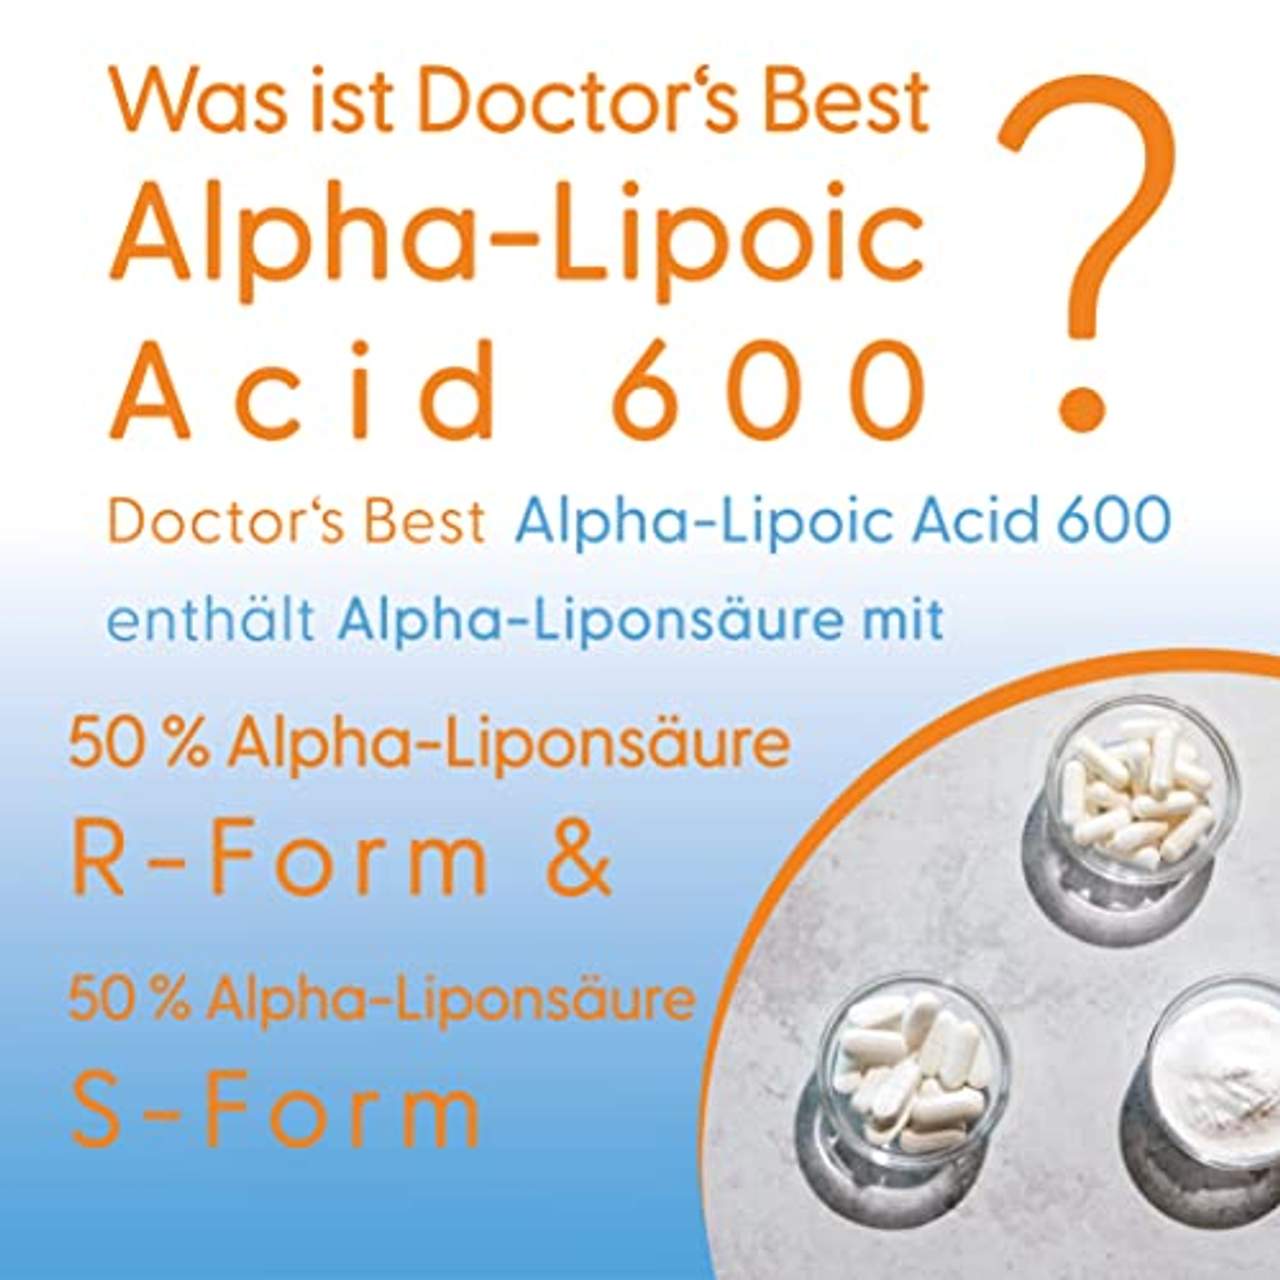 Doctor's Best Alpha-Lipoic Acid